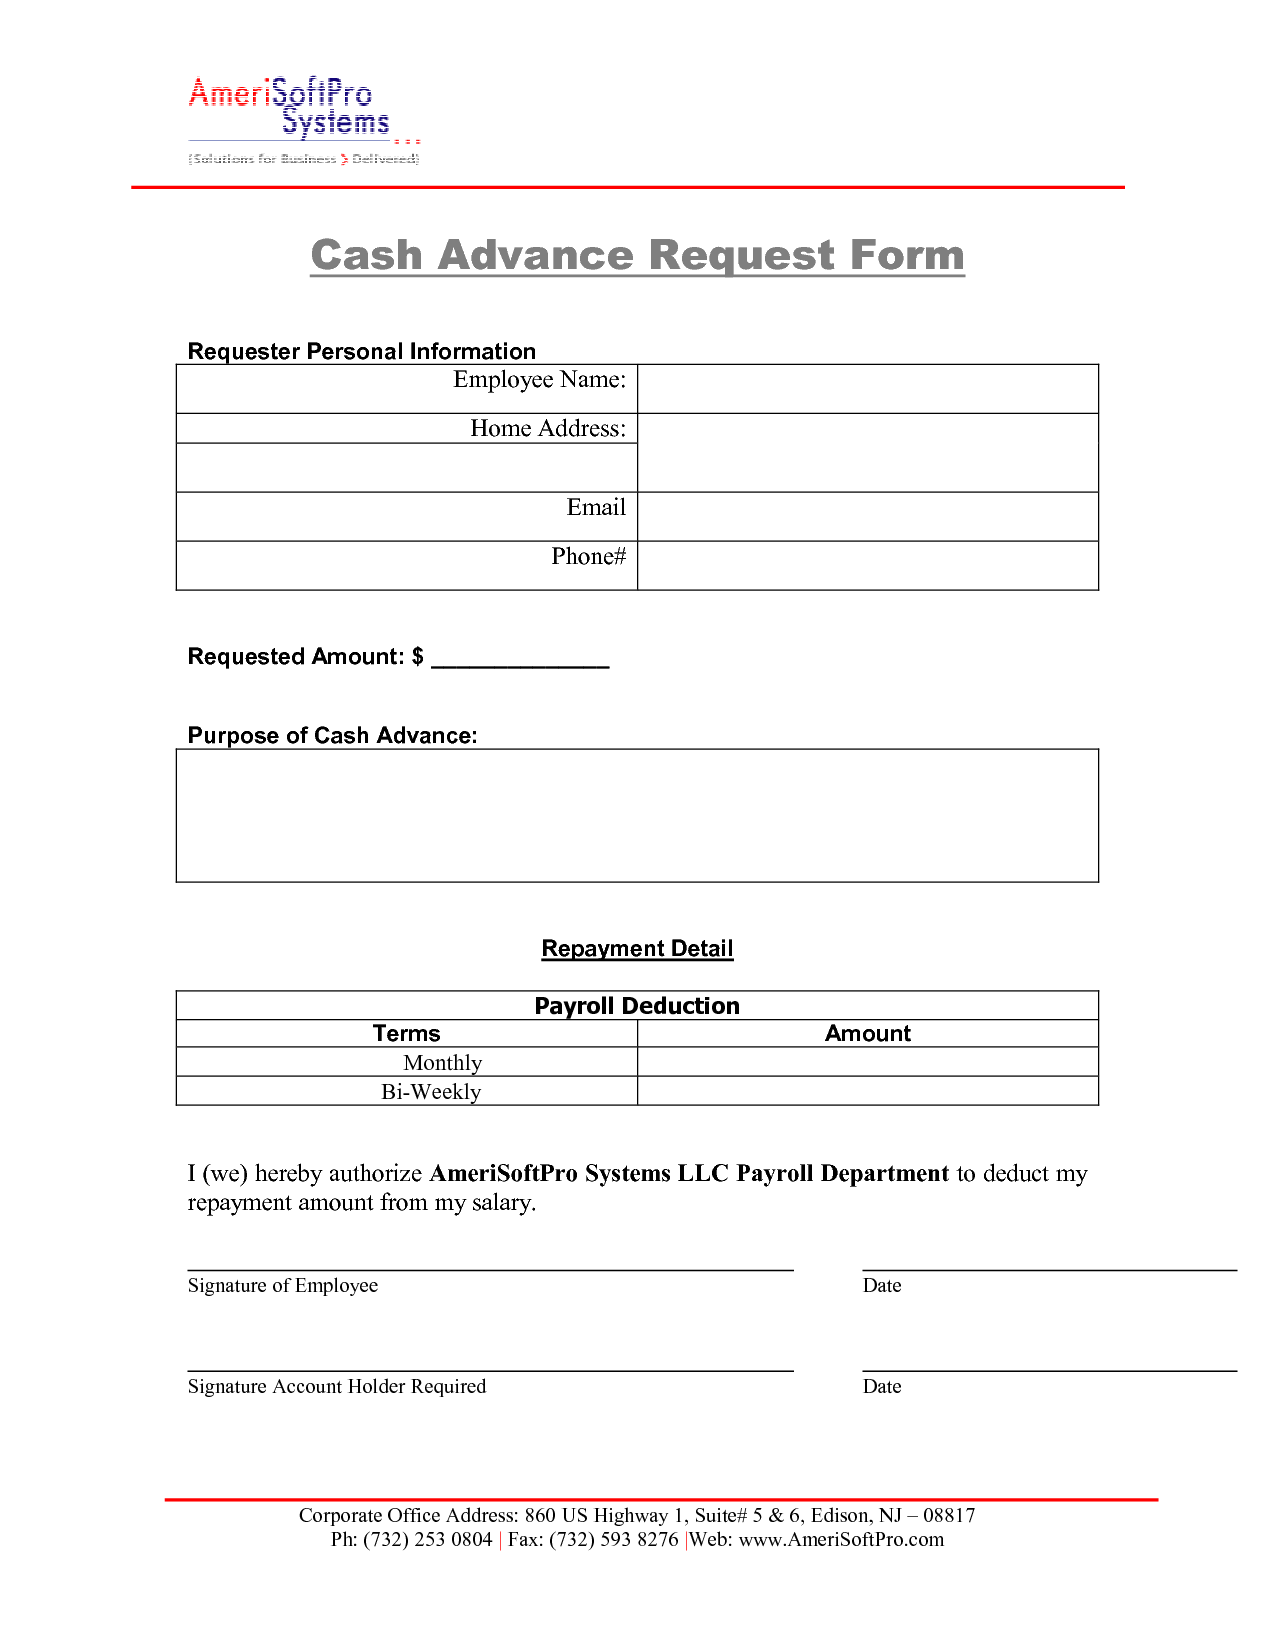 Cash Advance Form Excel 12 – elsik blue cetane